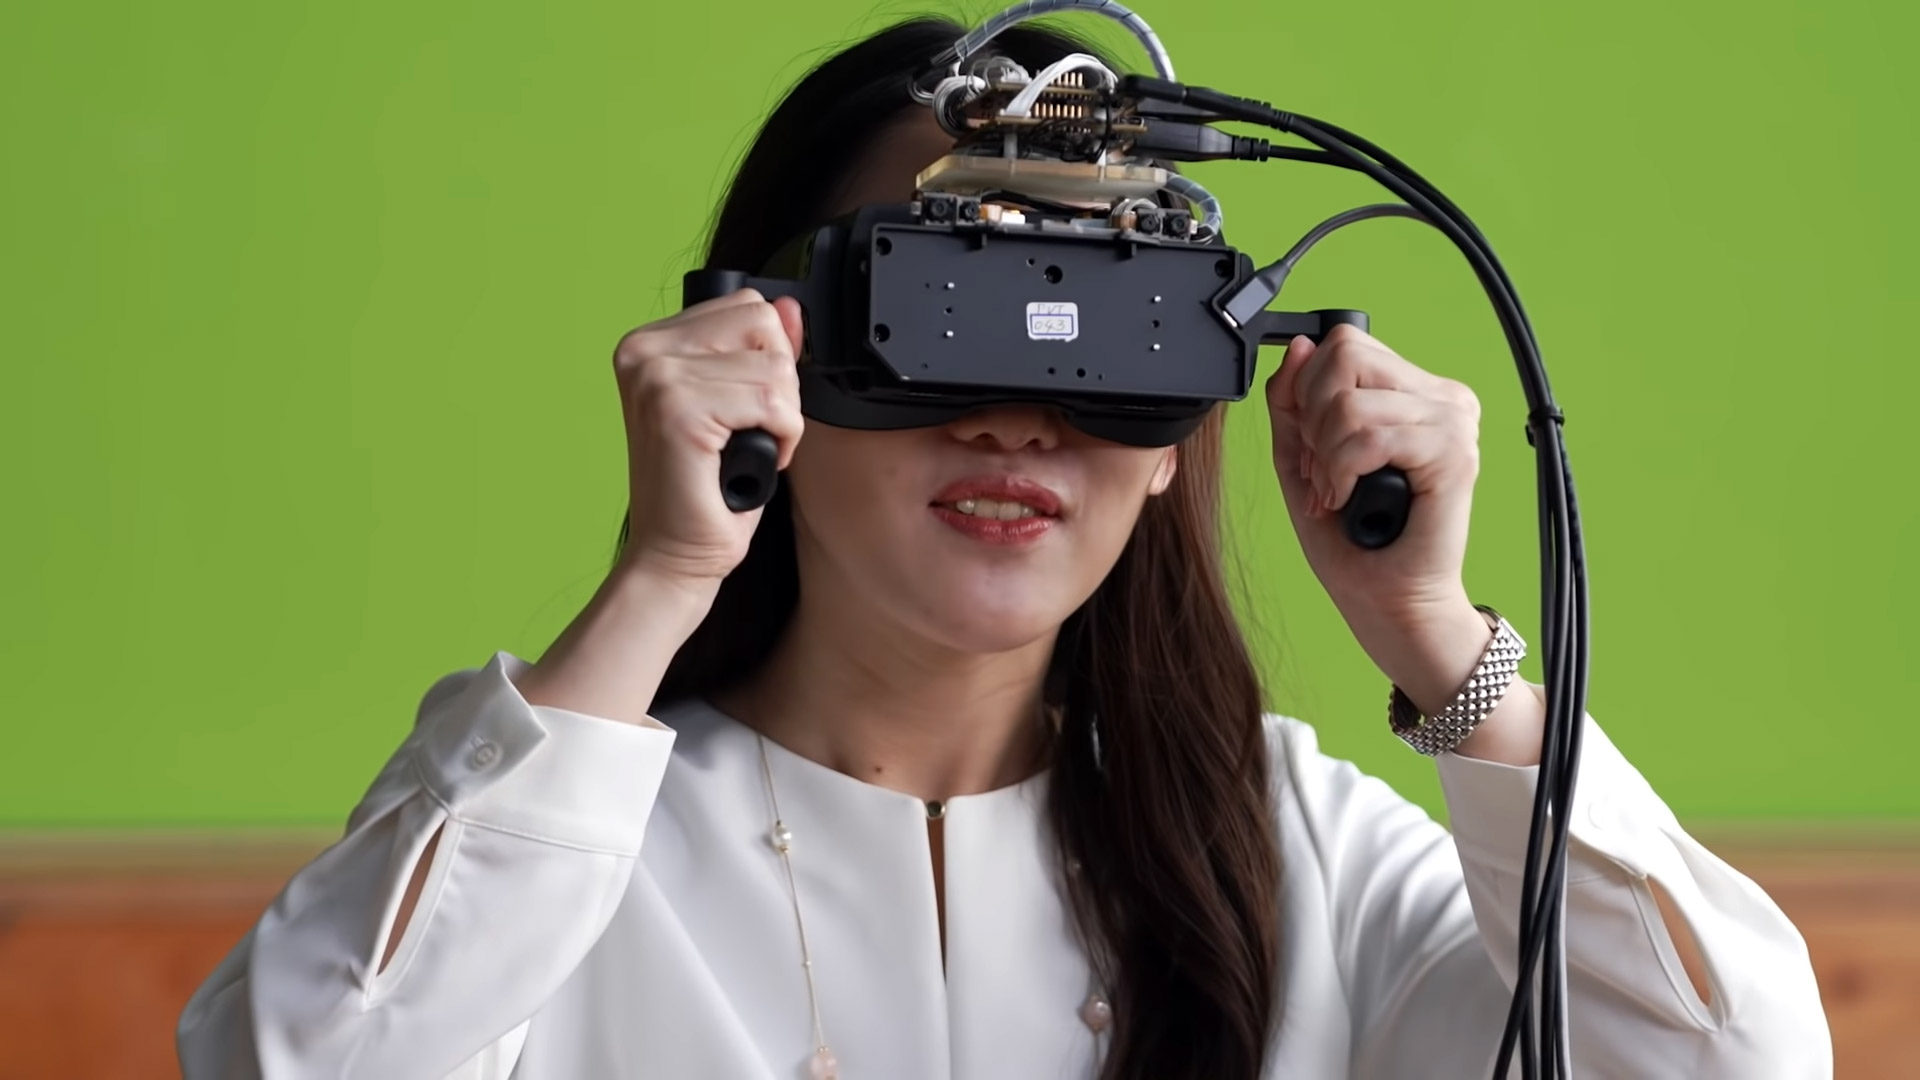 sony virtual reality glasses